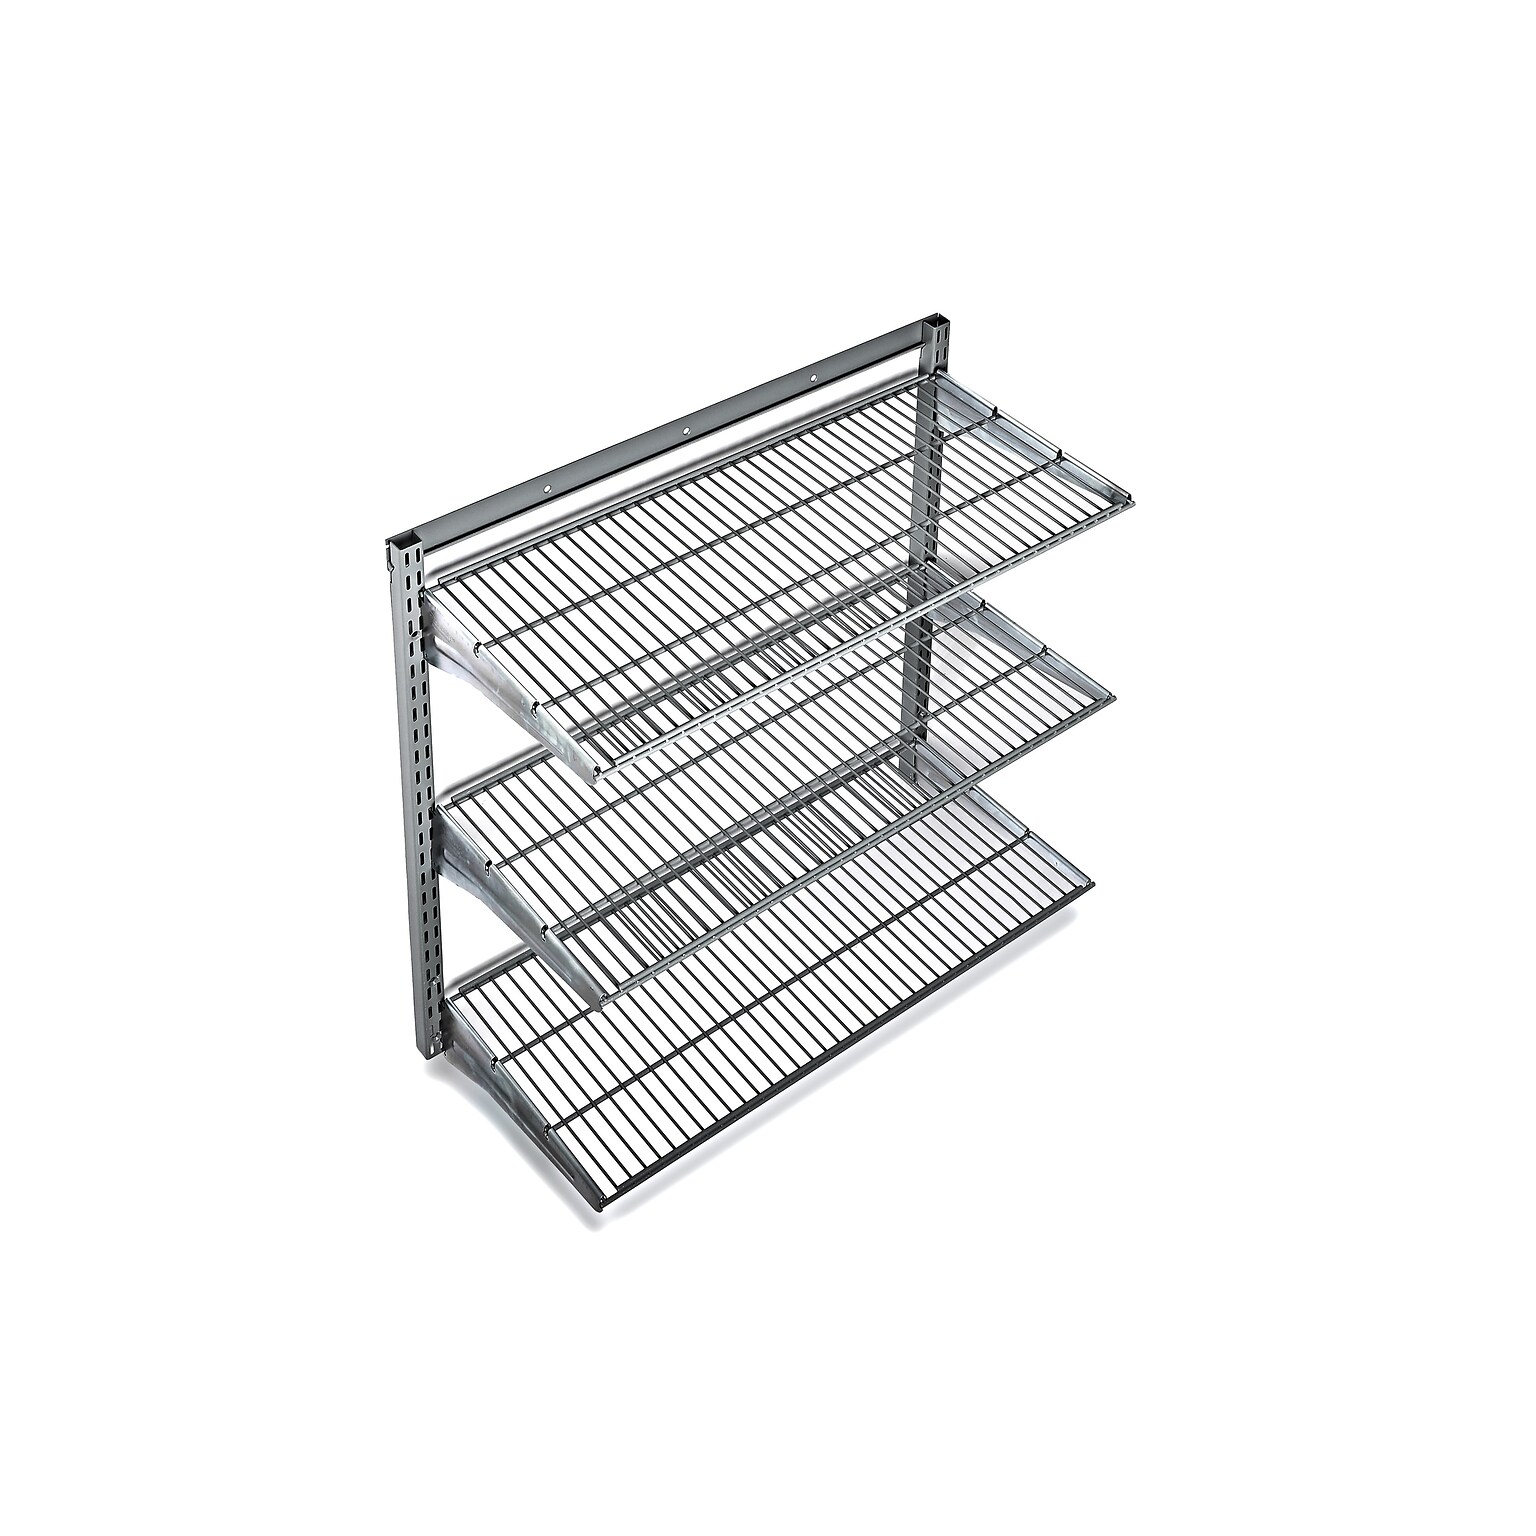 Triton Products Storability 3 Shelf Wall-Mount Unit (1795)